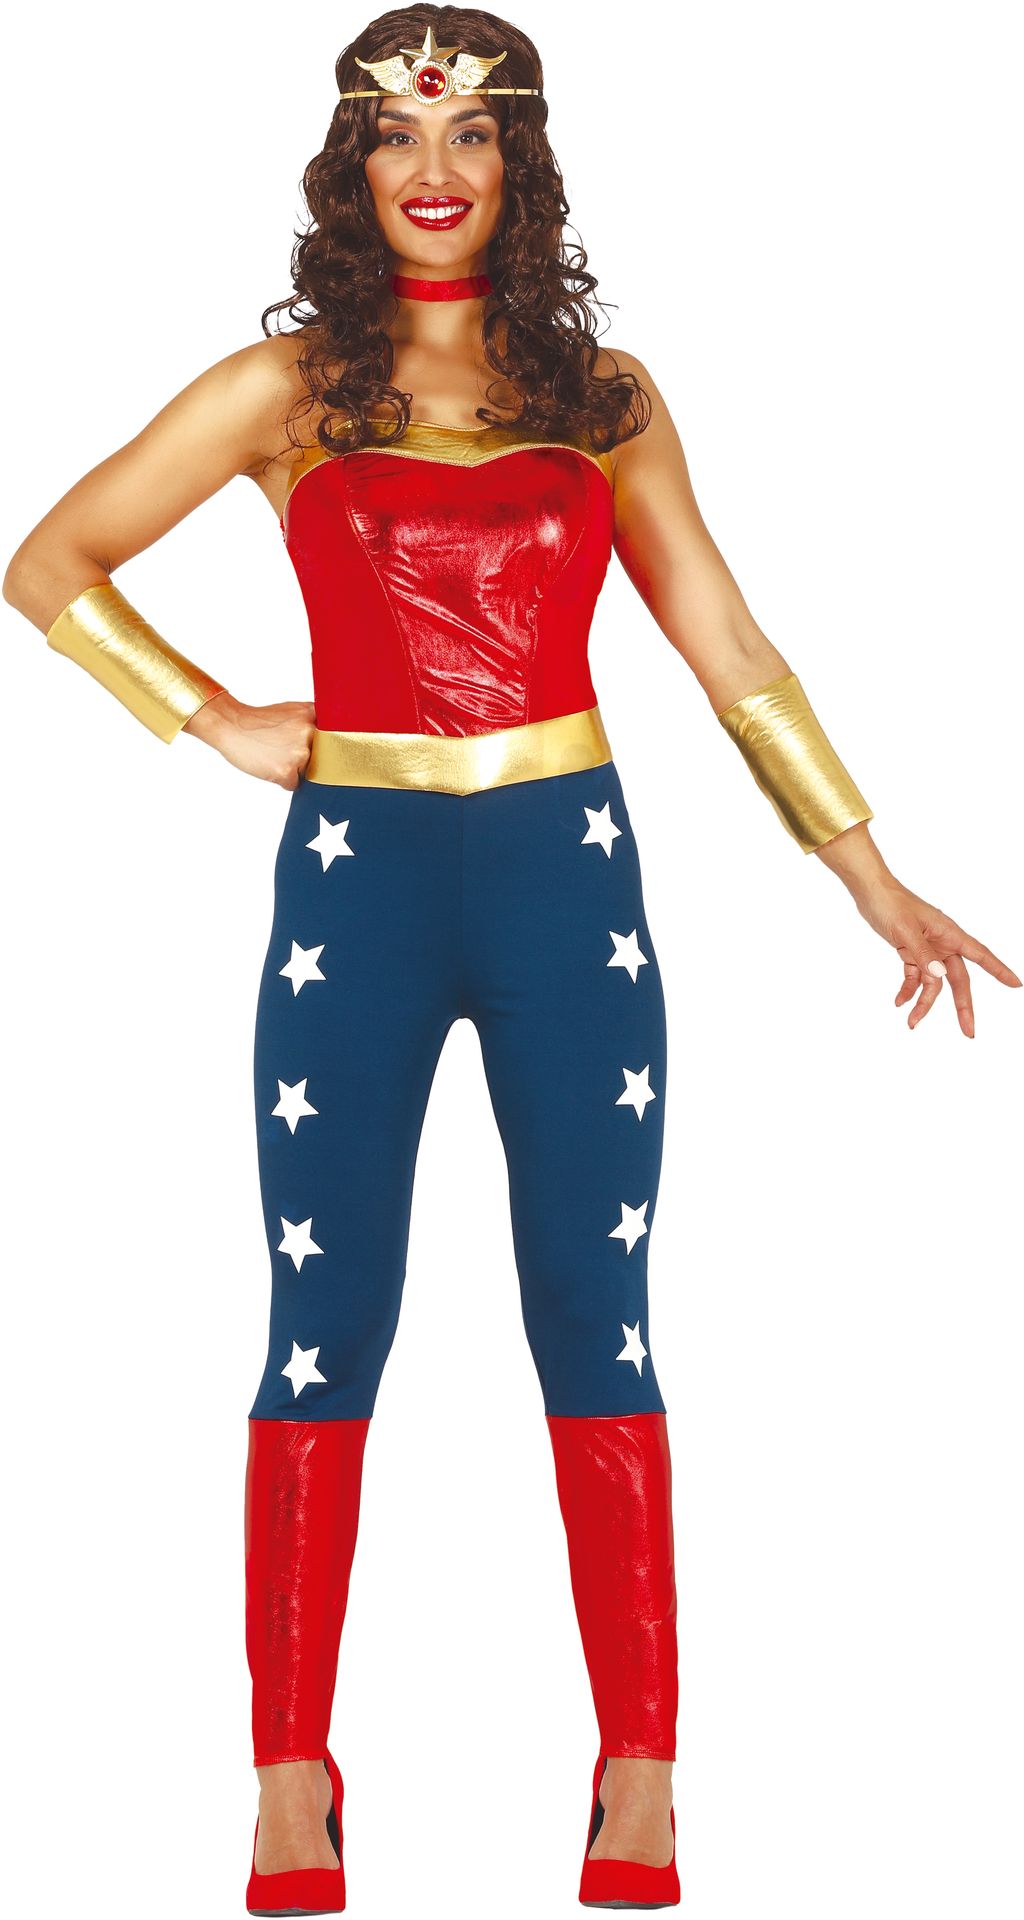 Power superwoman kostuum